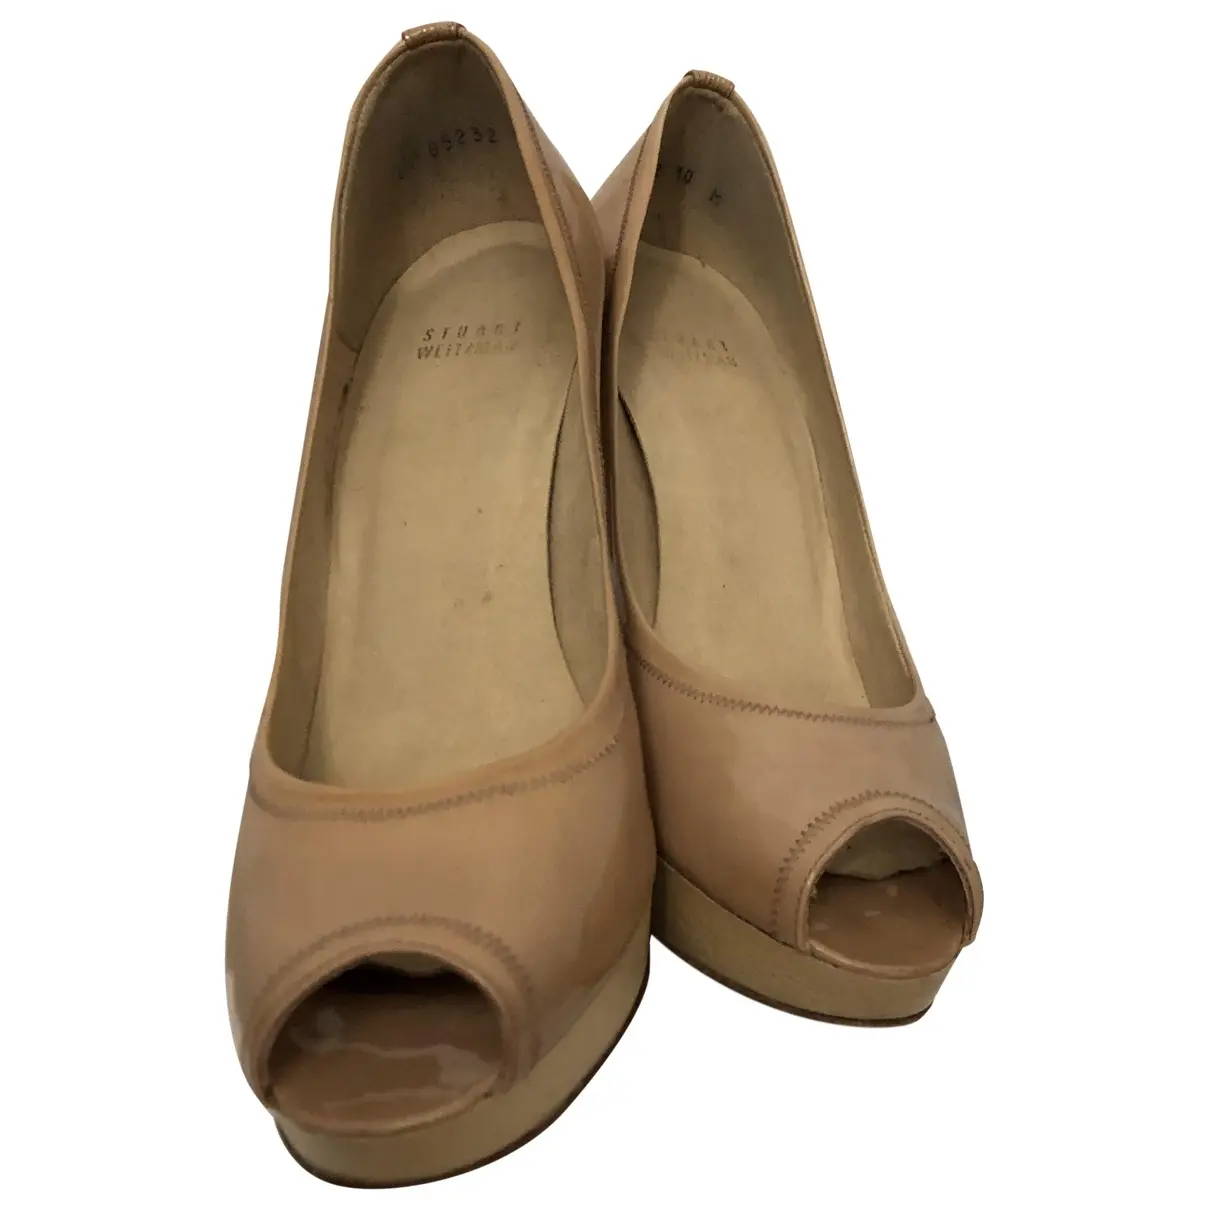 Patent leather heels Stuart Weitzman